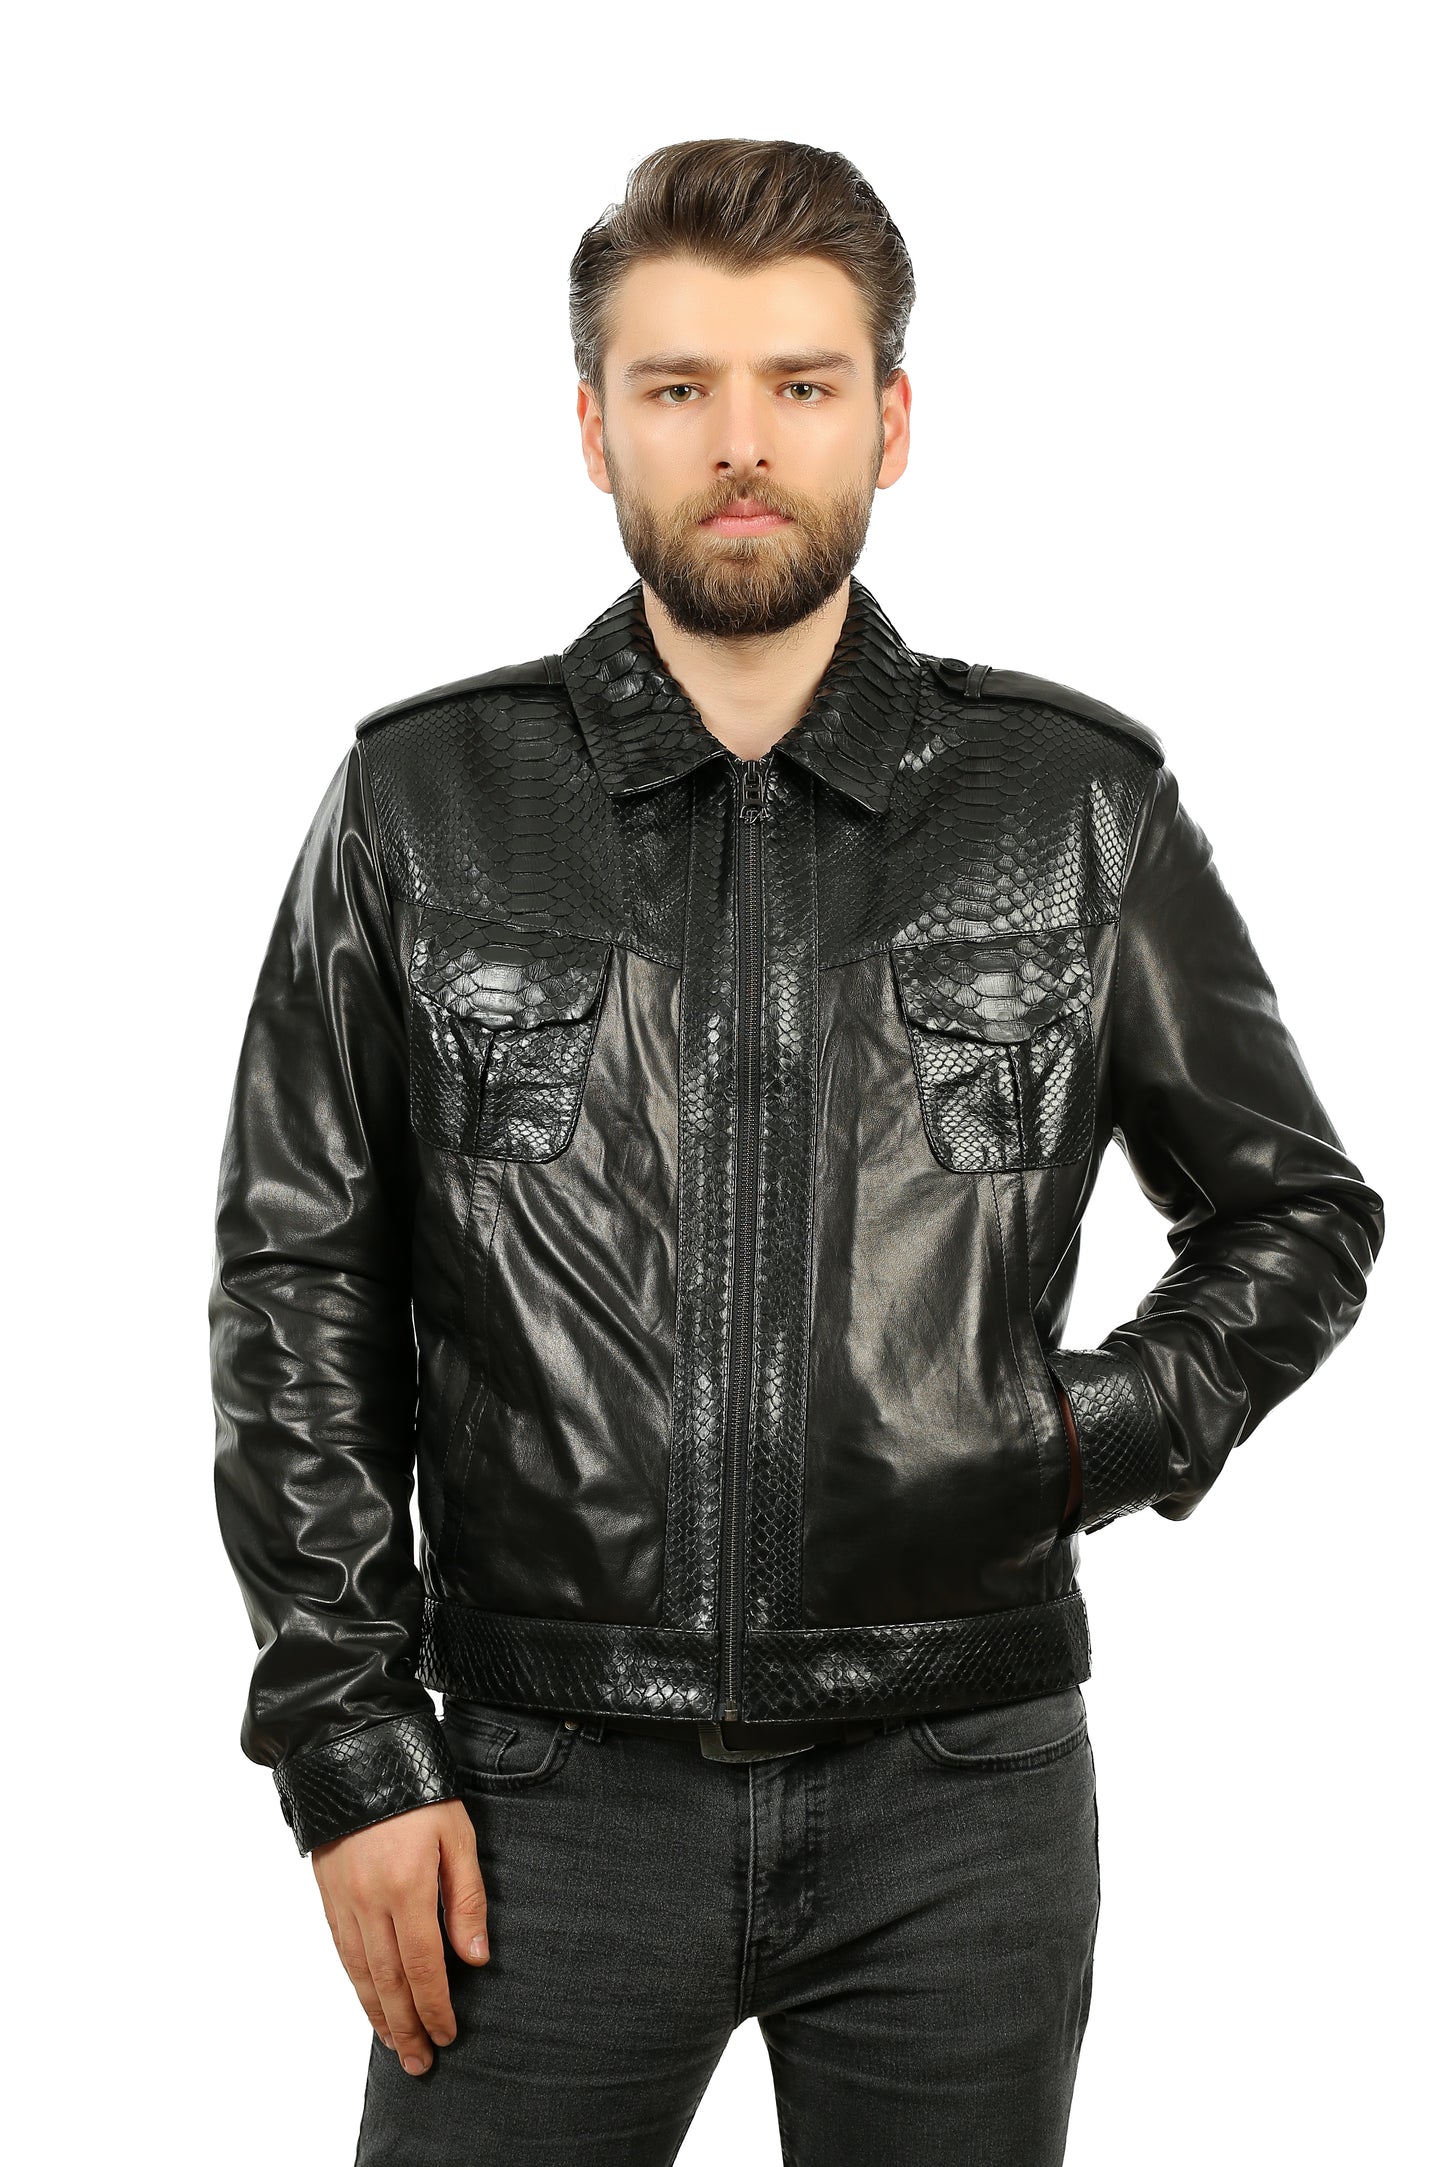 The Laquin Pythn Black Leather Men Jacket